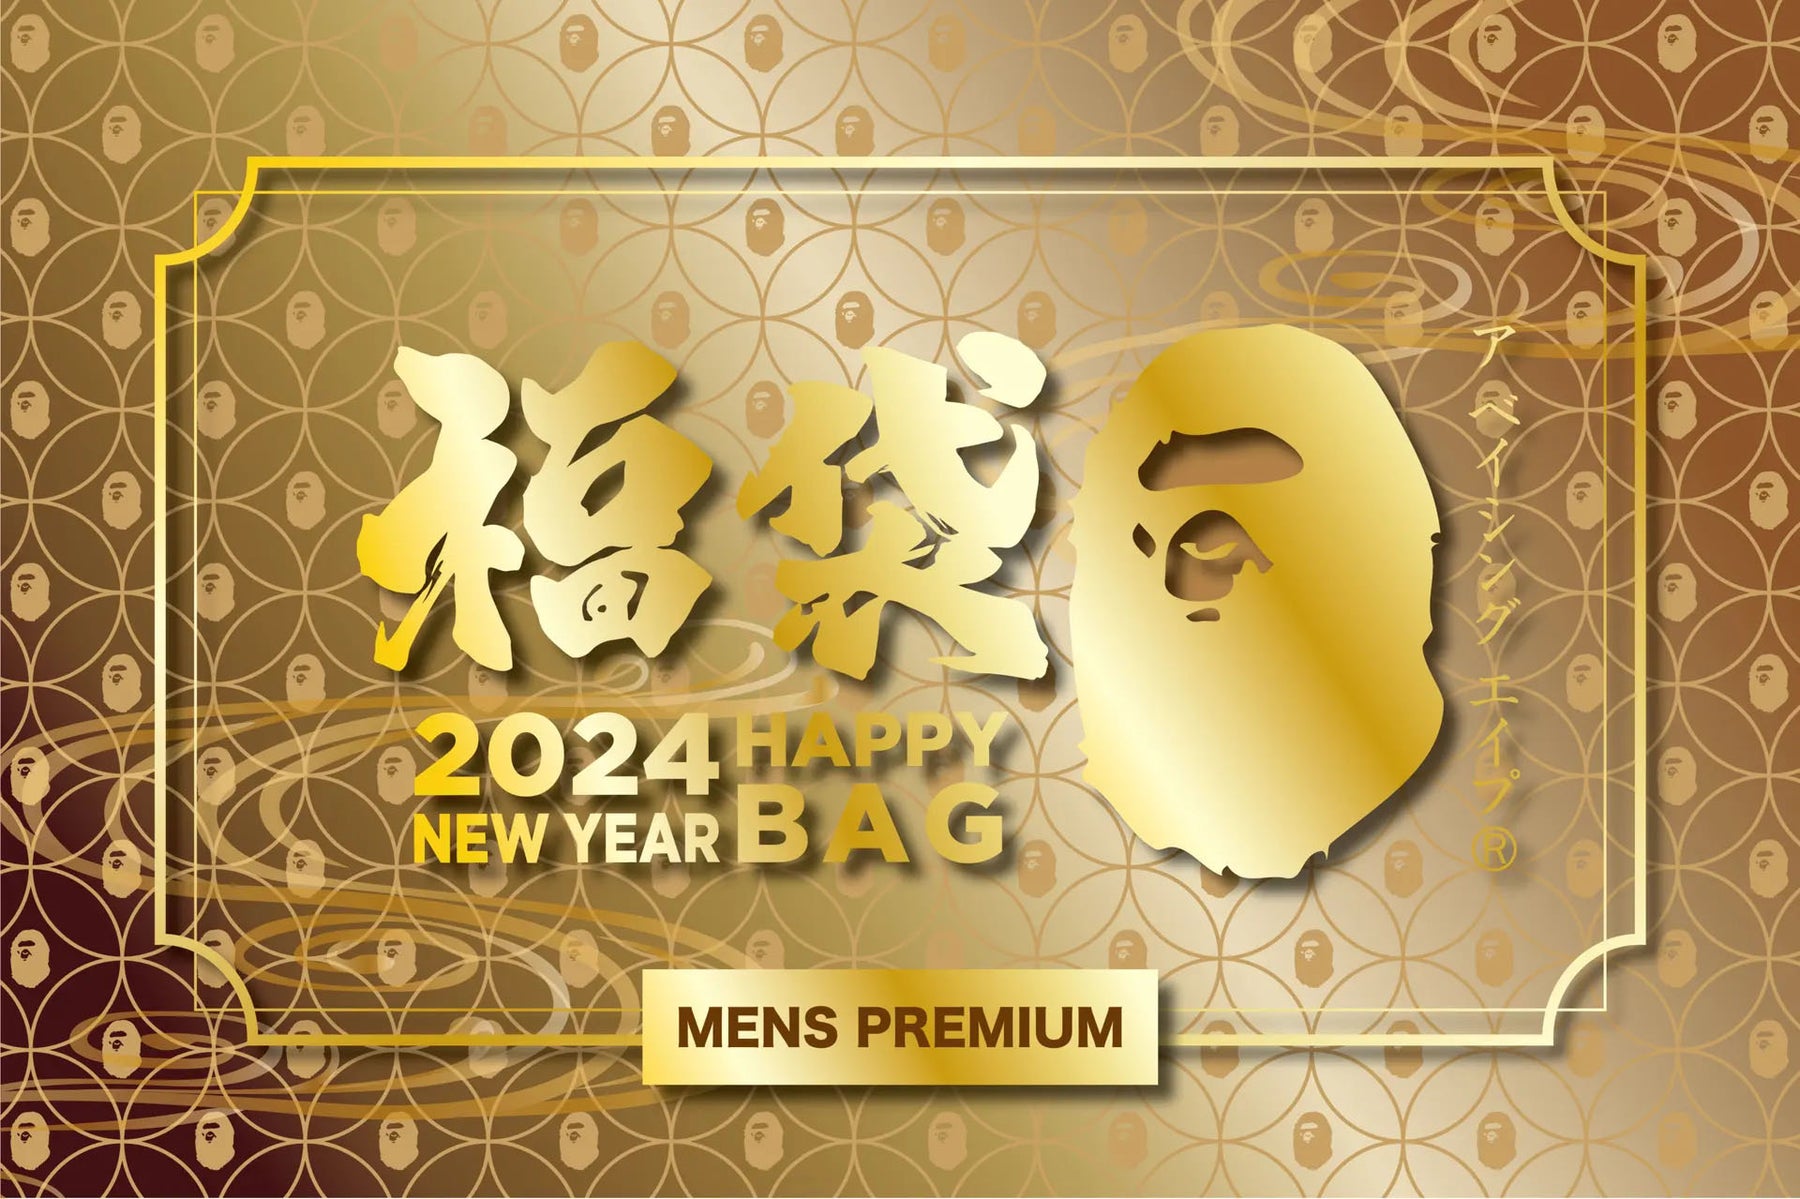 BAPE PREMIUM HAPPY NEW YEAR BAG 2024 福袋